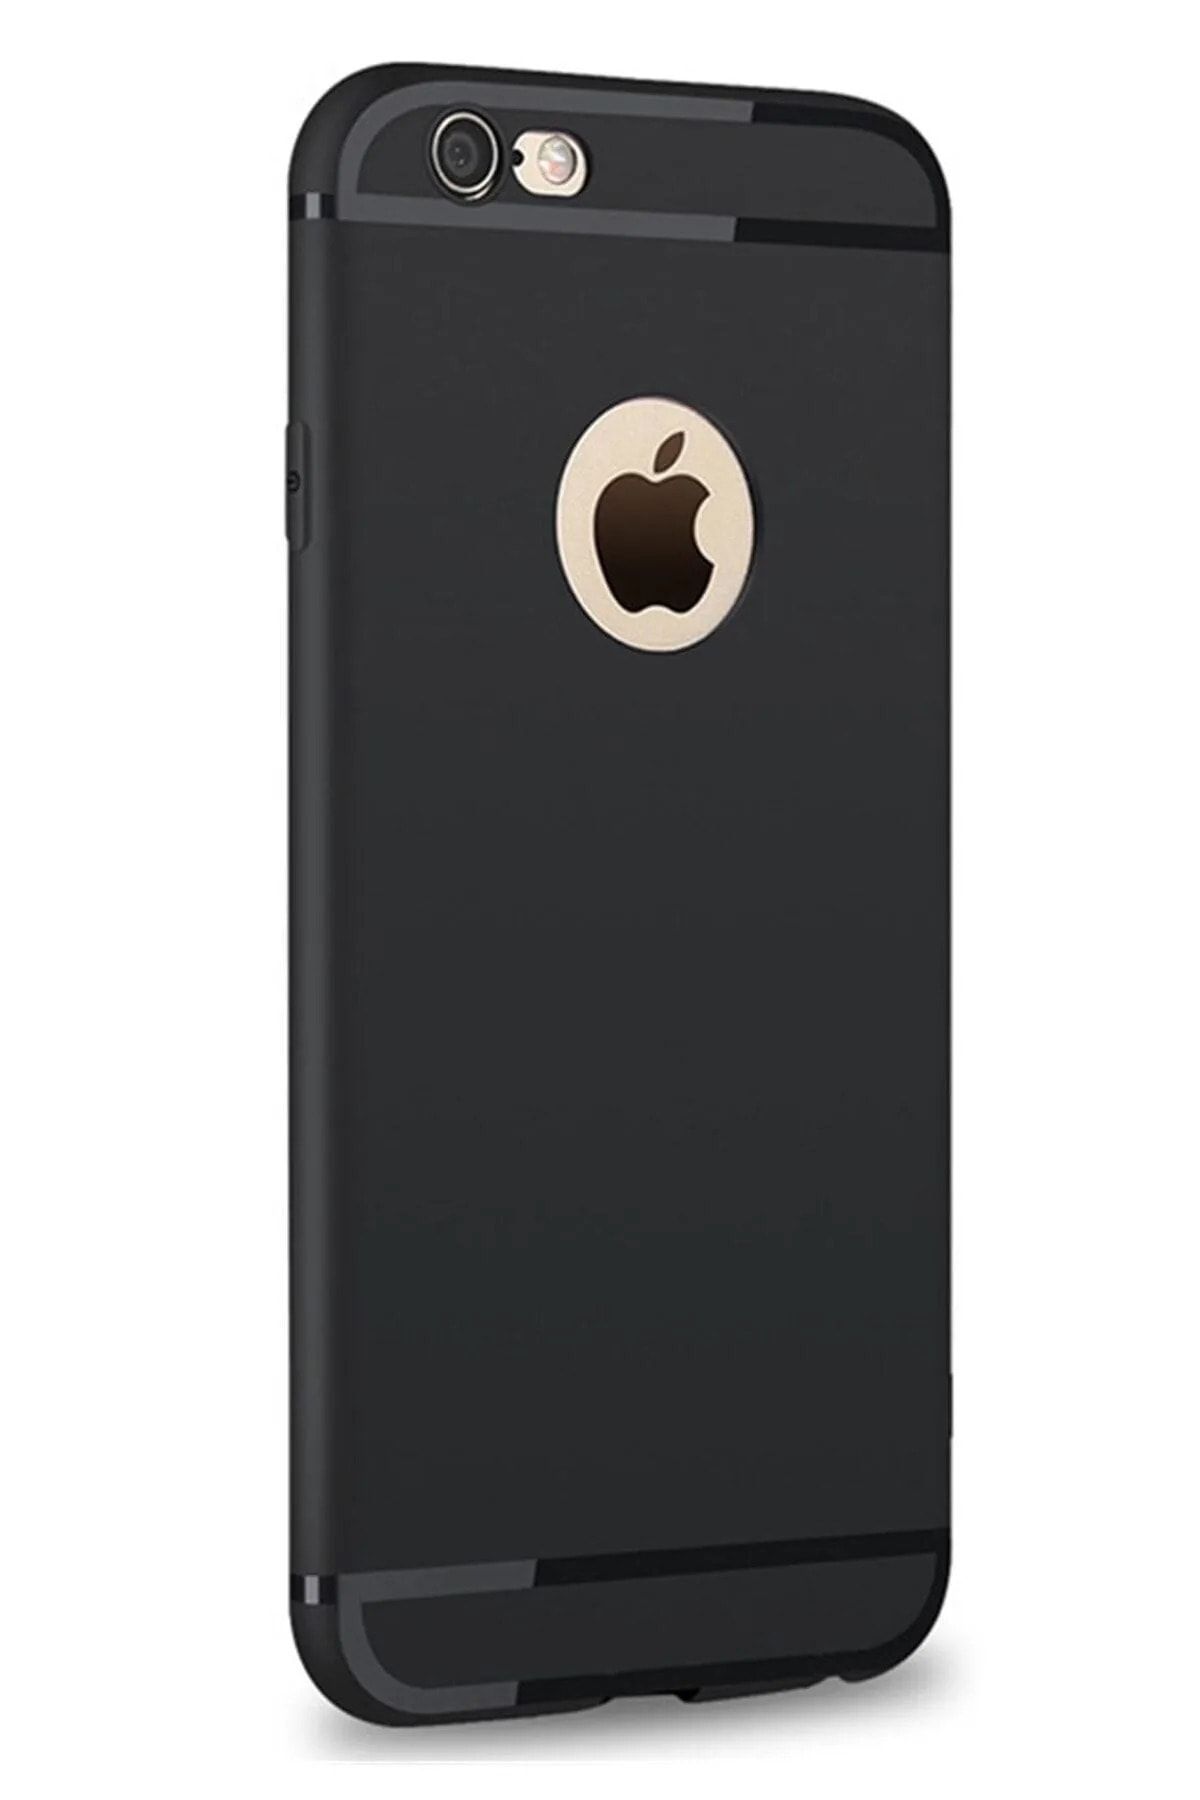 TeknoŞehir Iphone 6 / 6s Uyumlu Kılıf Ultra Ince Tıpalı Siyah Silikon Kılıf